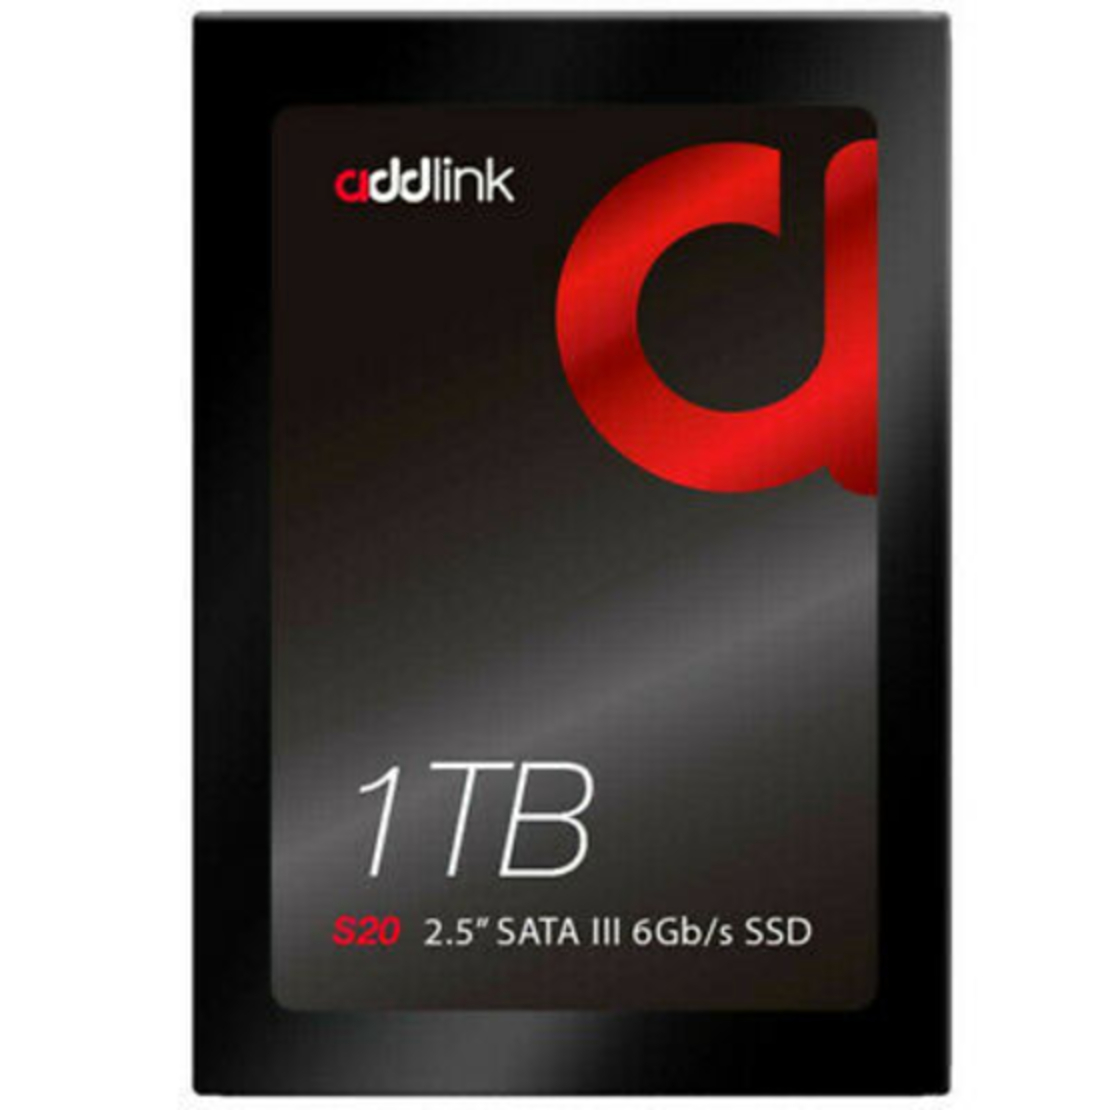 Addlink SSD 1.0TB S20 SATA3 2.5